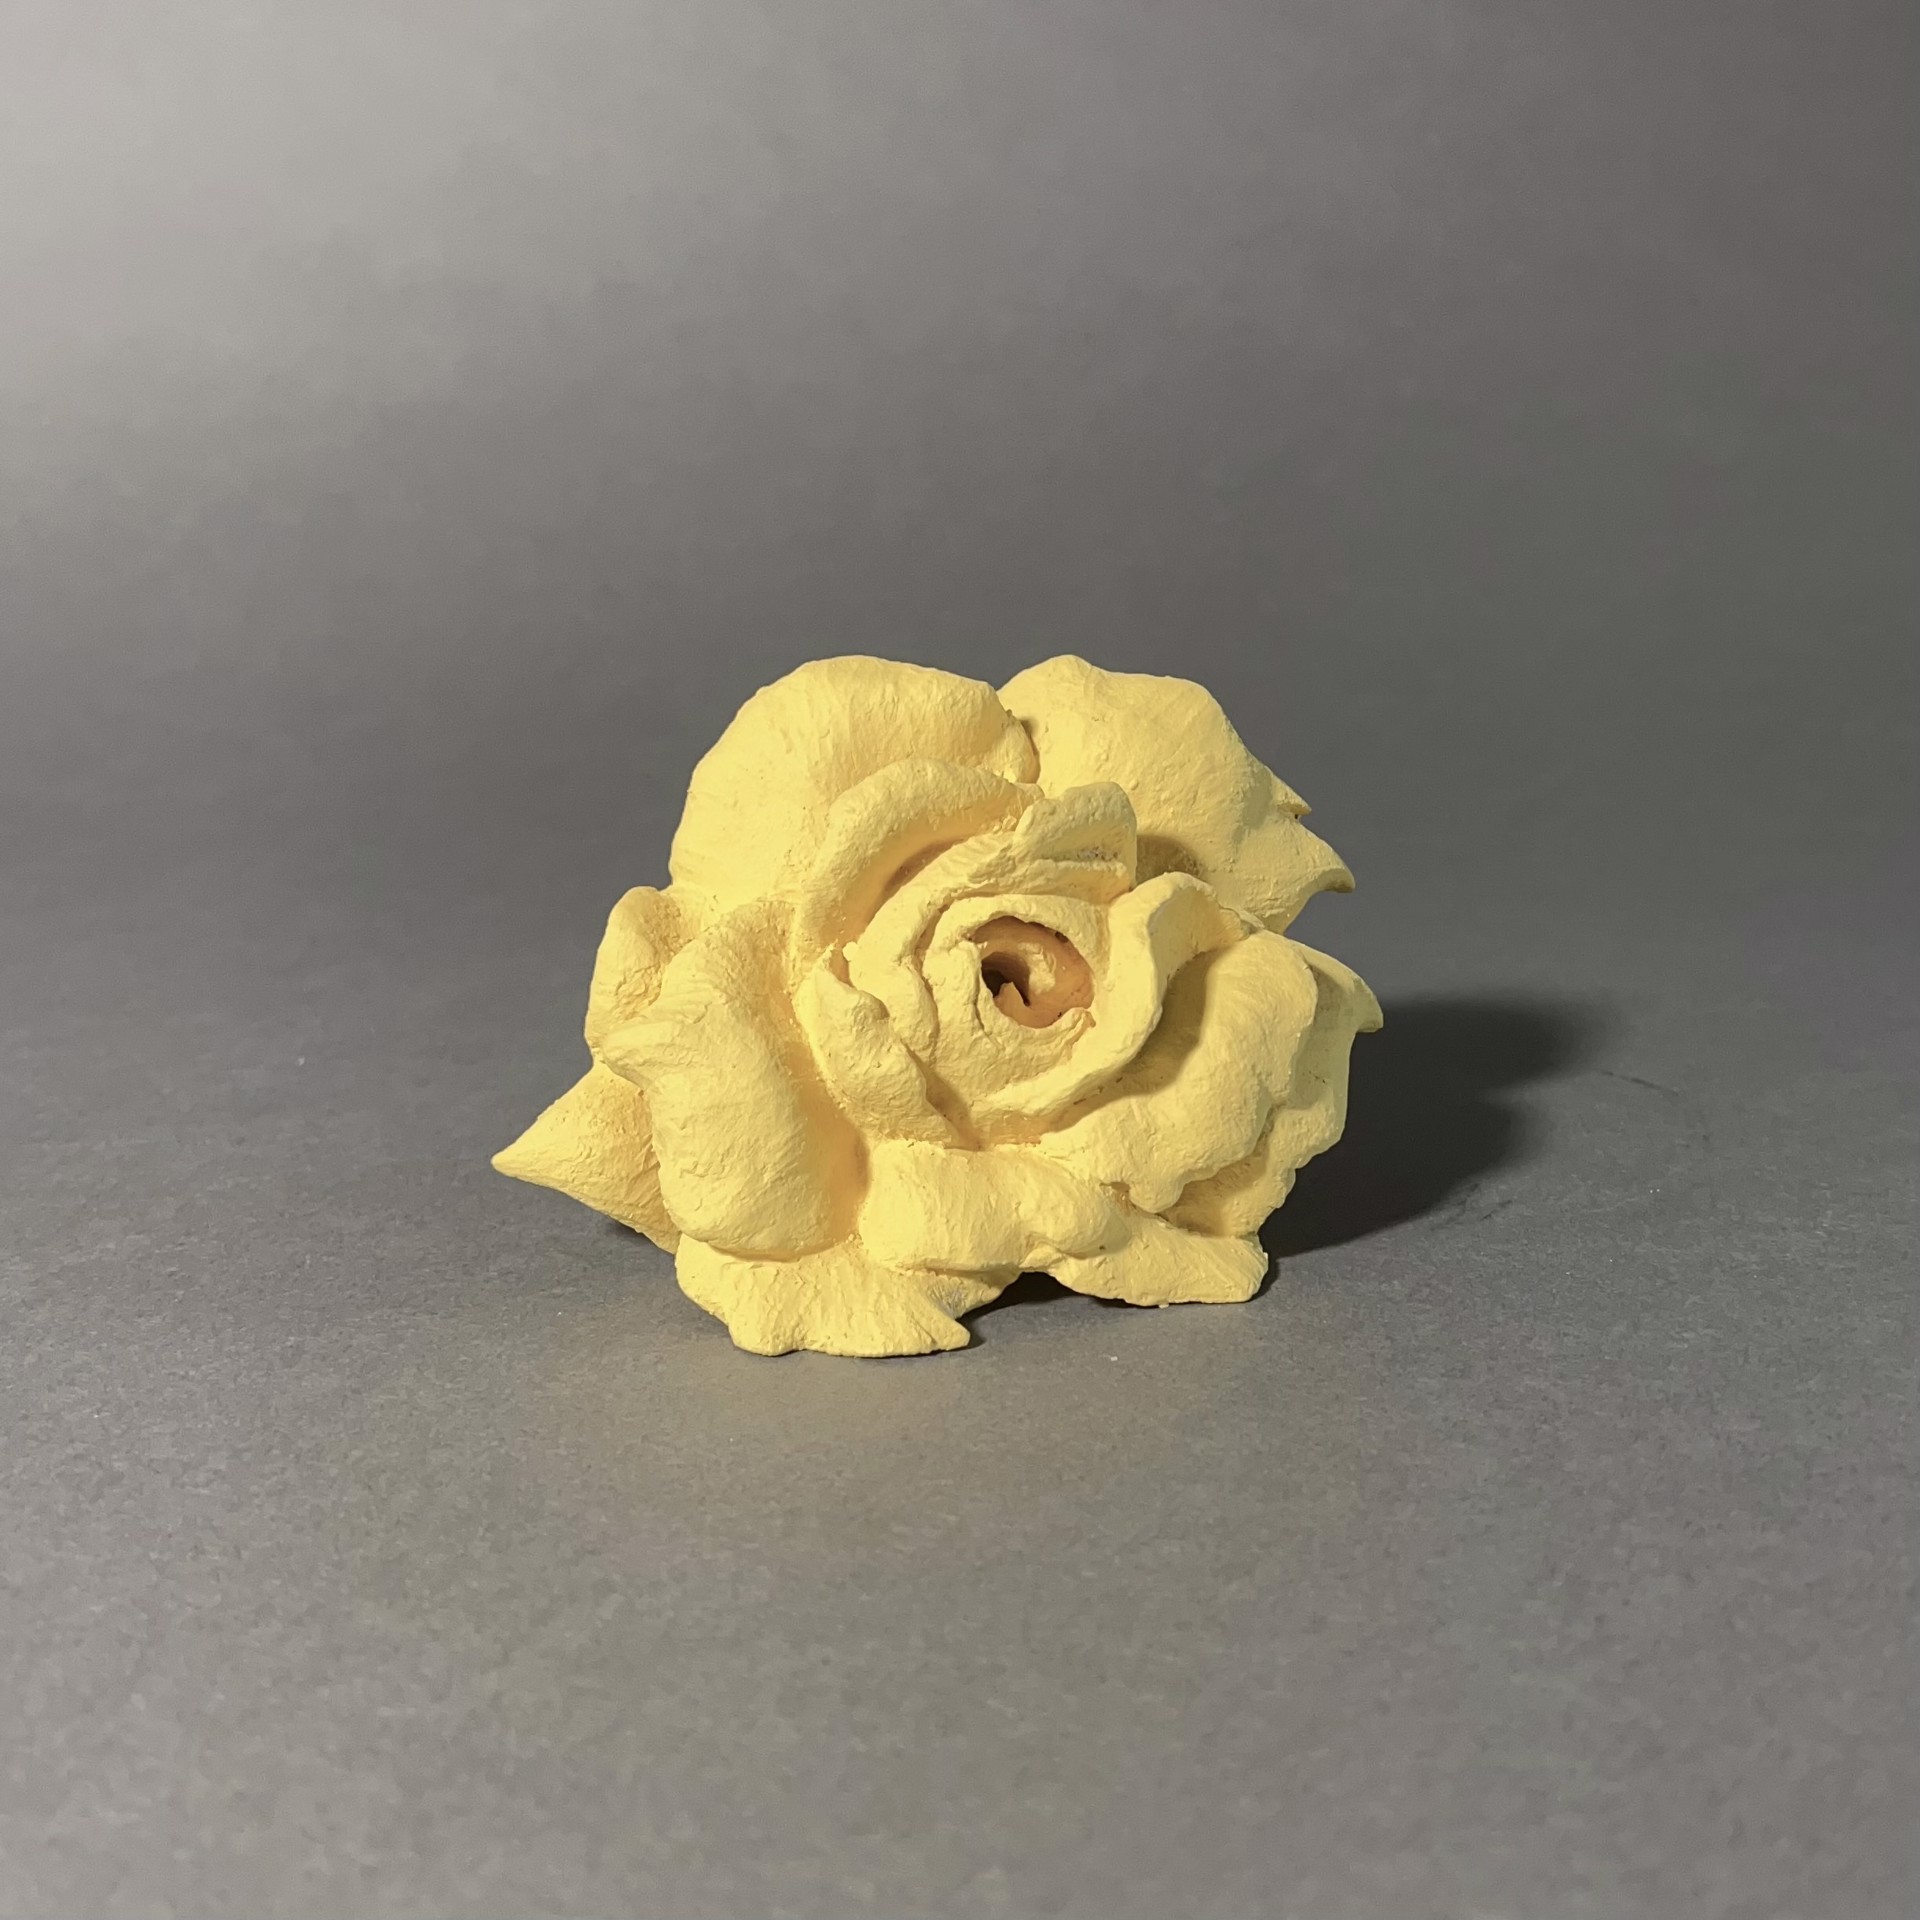 Small Yellow Rose by Amanda Wood